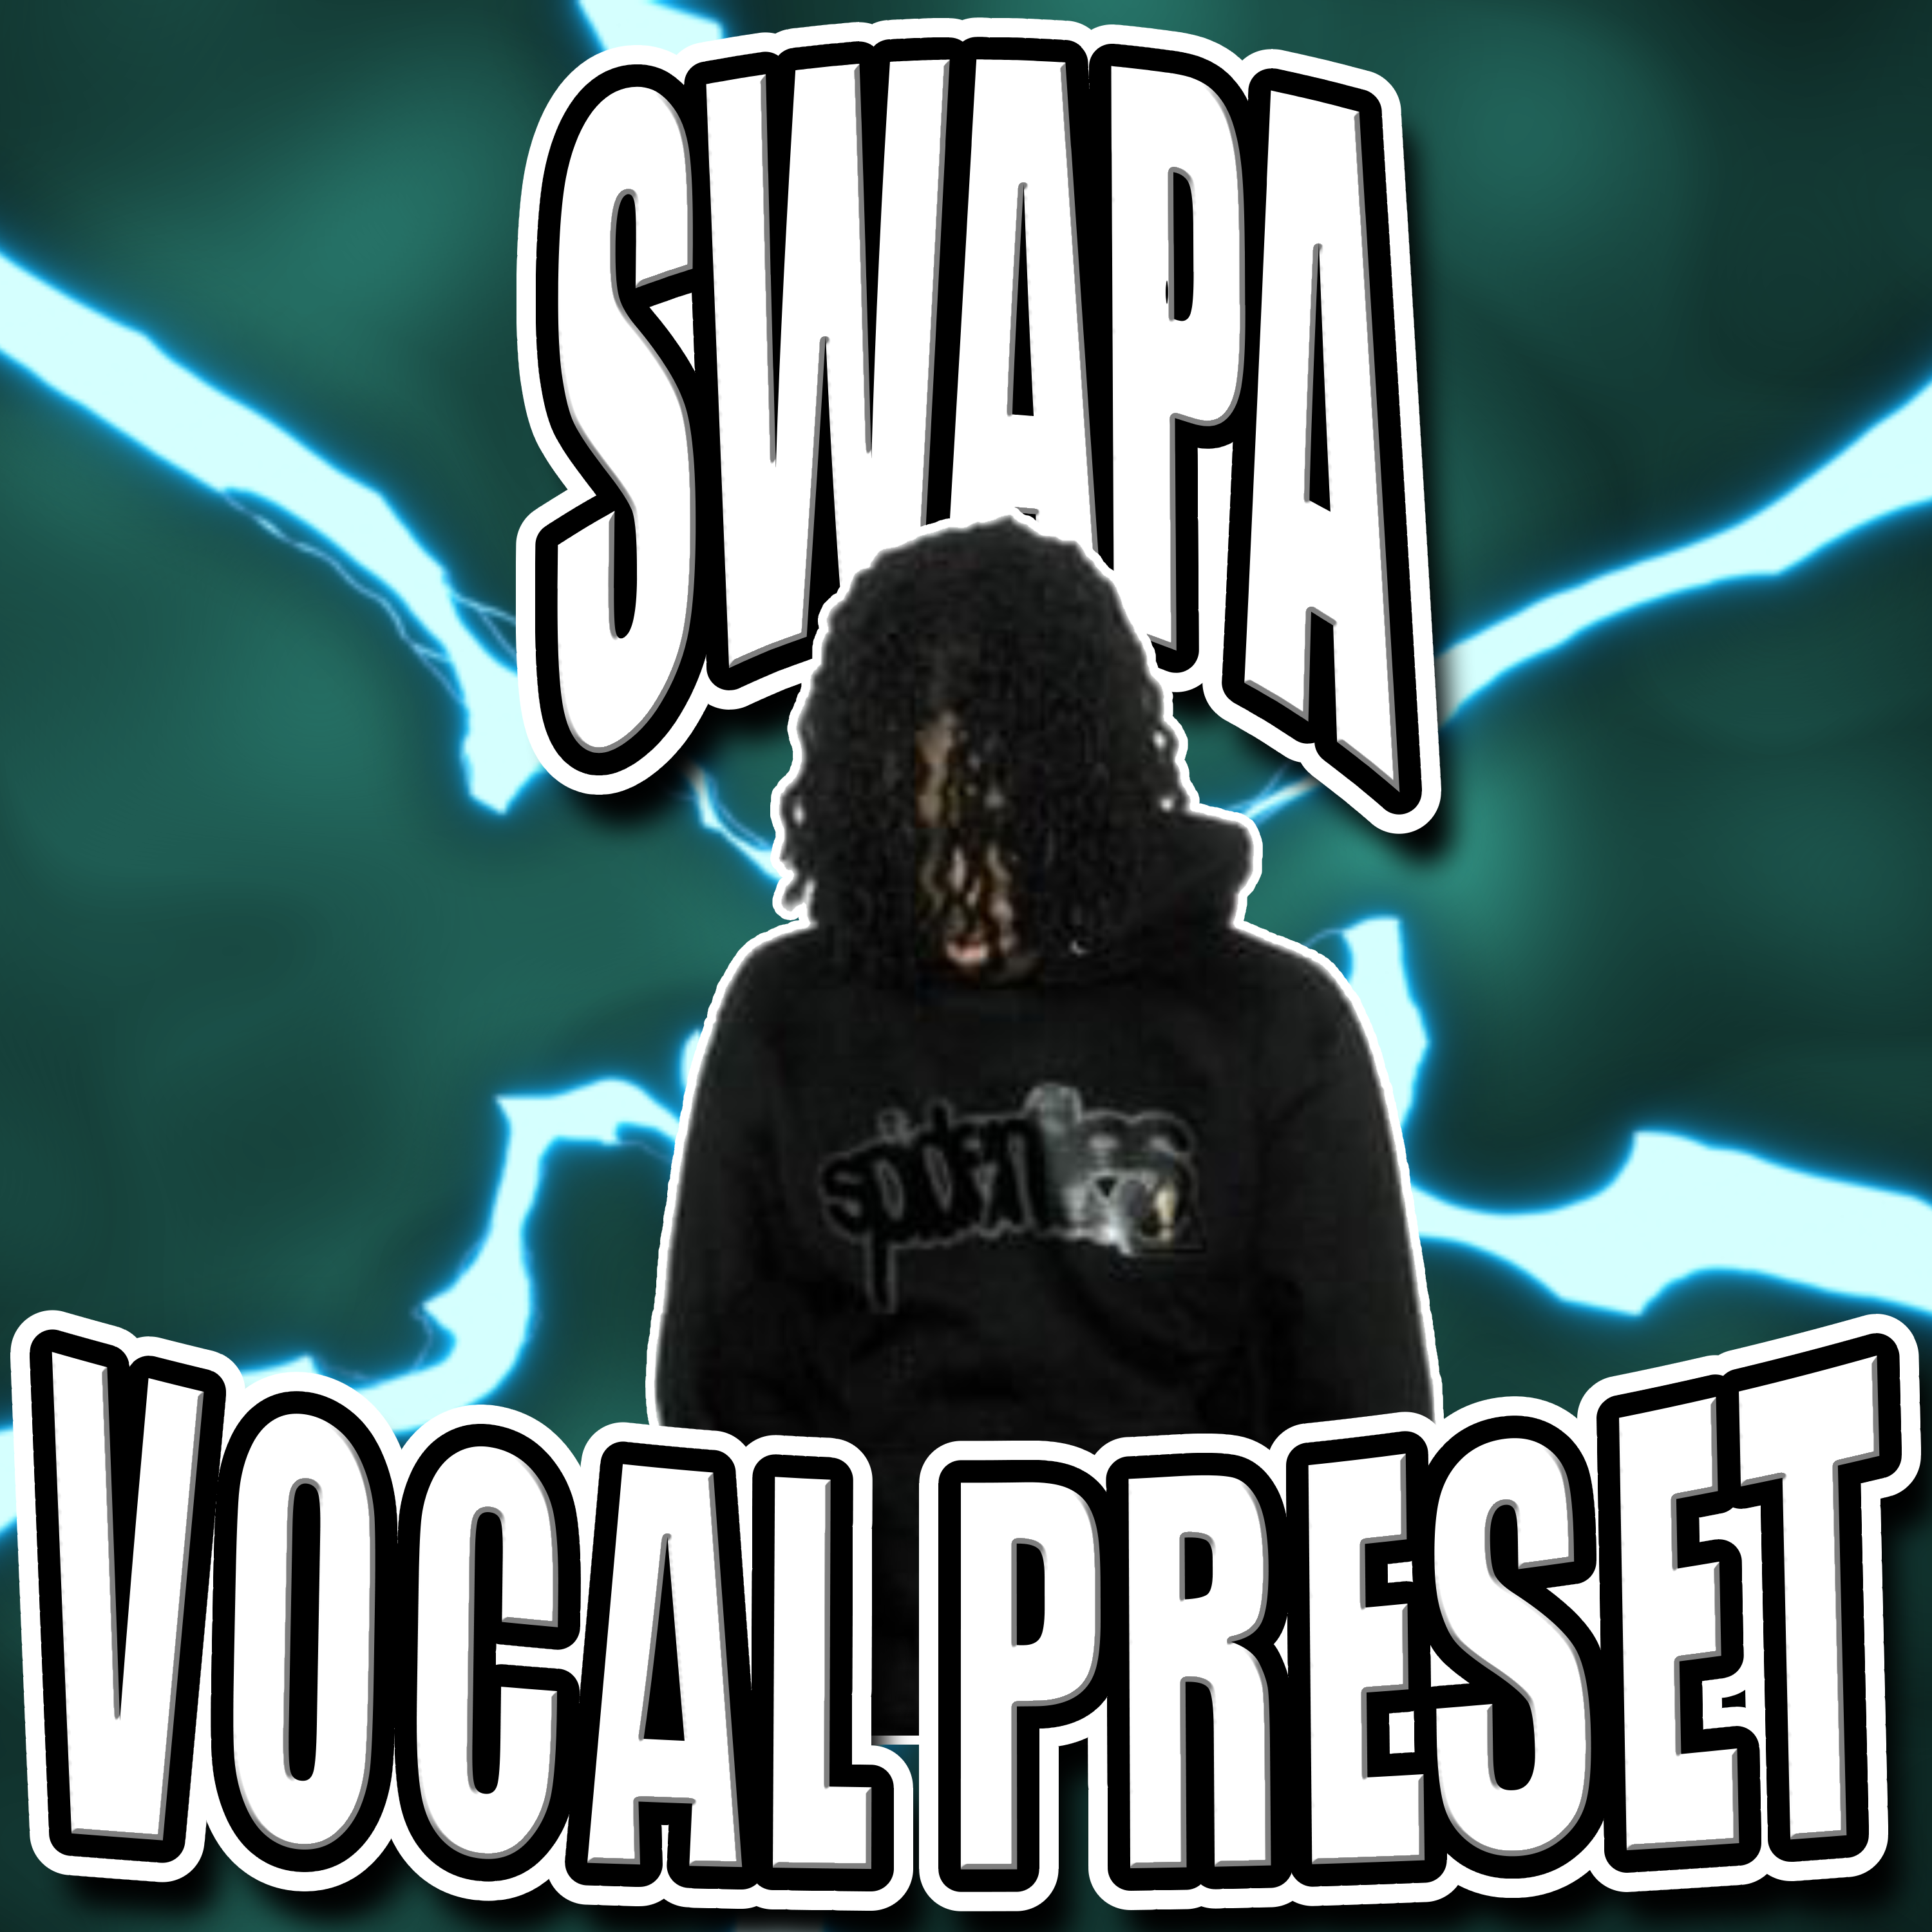 Swapa Vocal Preset